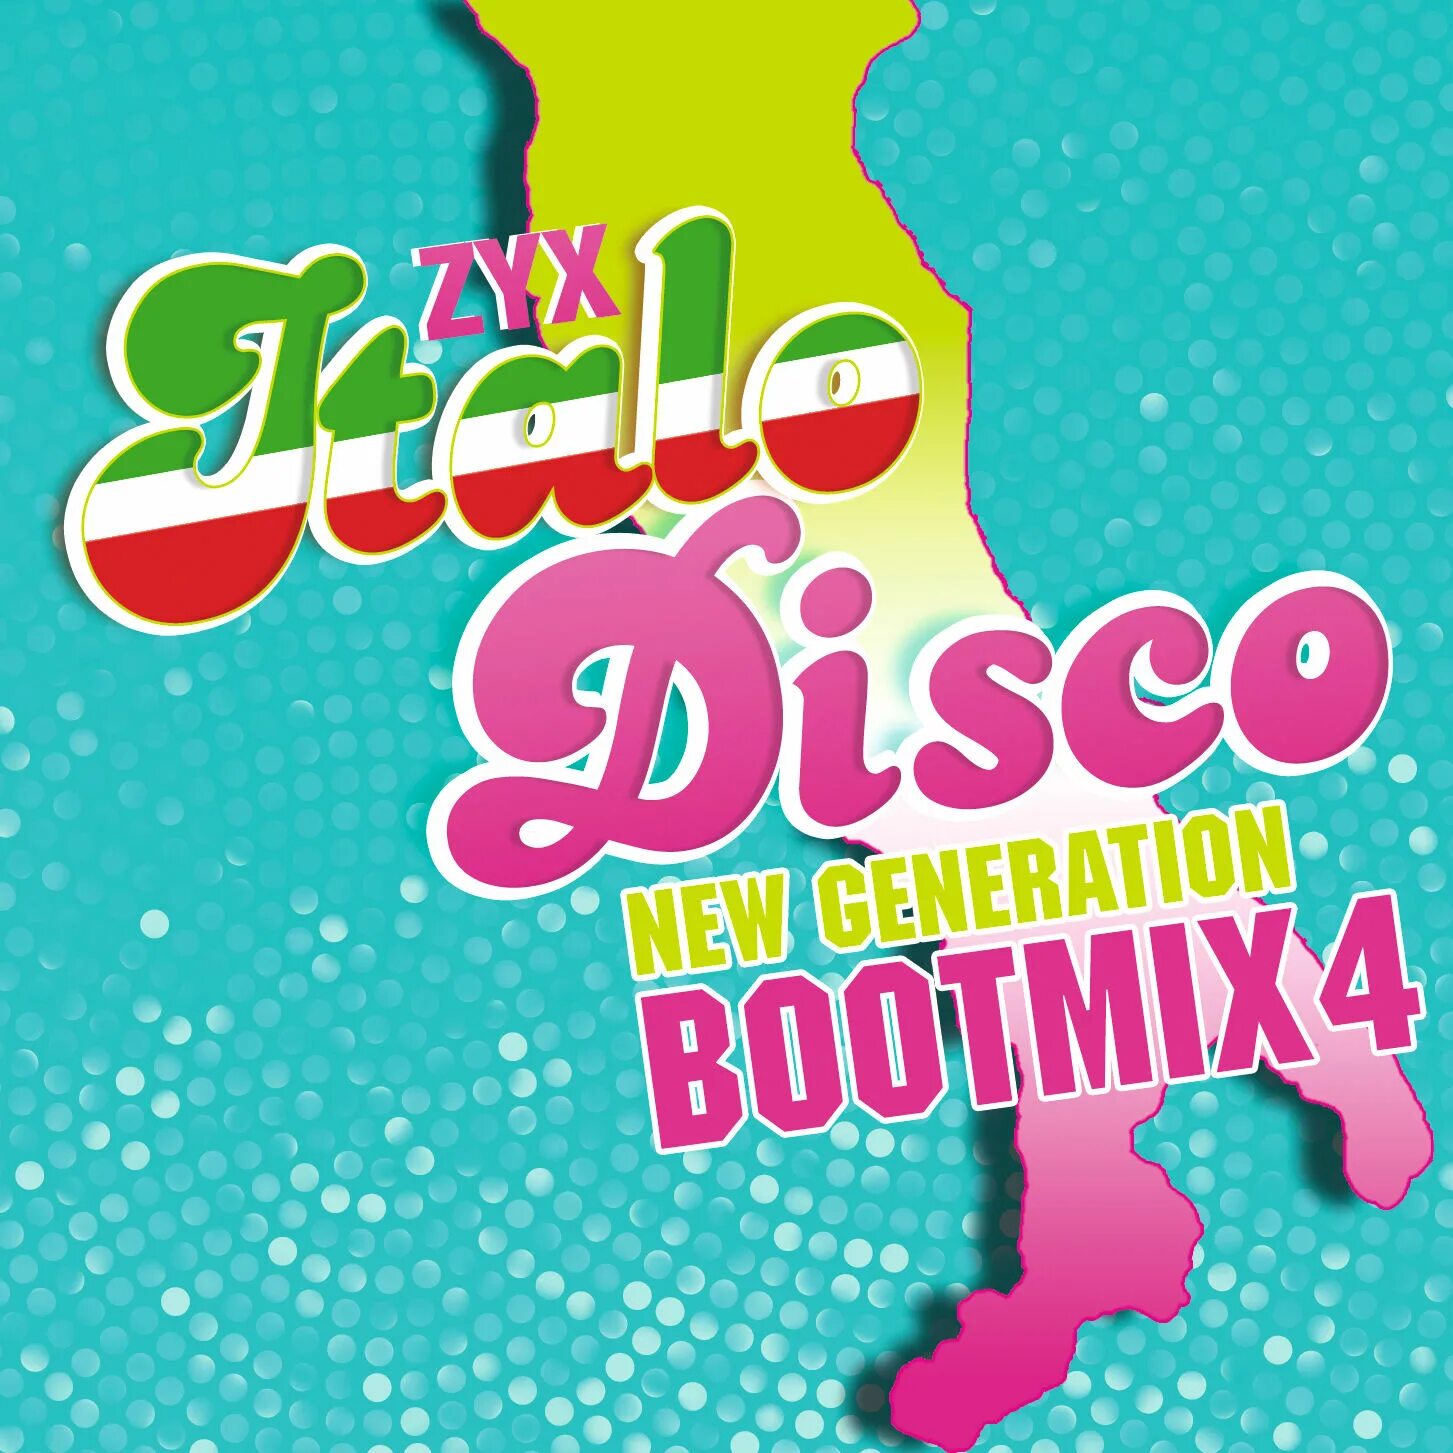 Italo Disco New Generation. ZYX Italo Disco New Generation. ZYX Italo Disco New Generation Vol.17. ZYX Italo Disco Boot Mix.